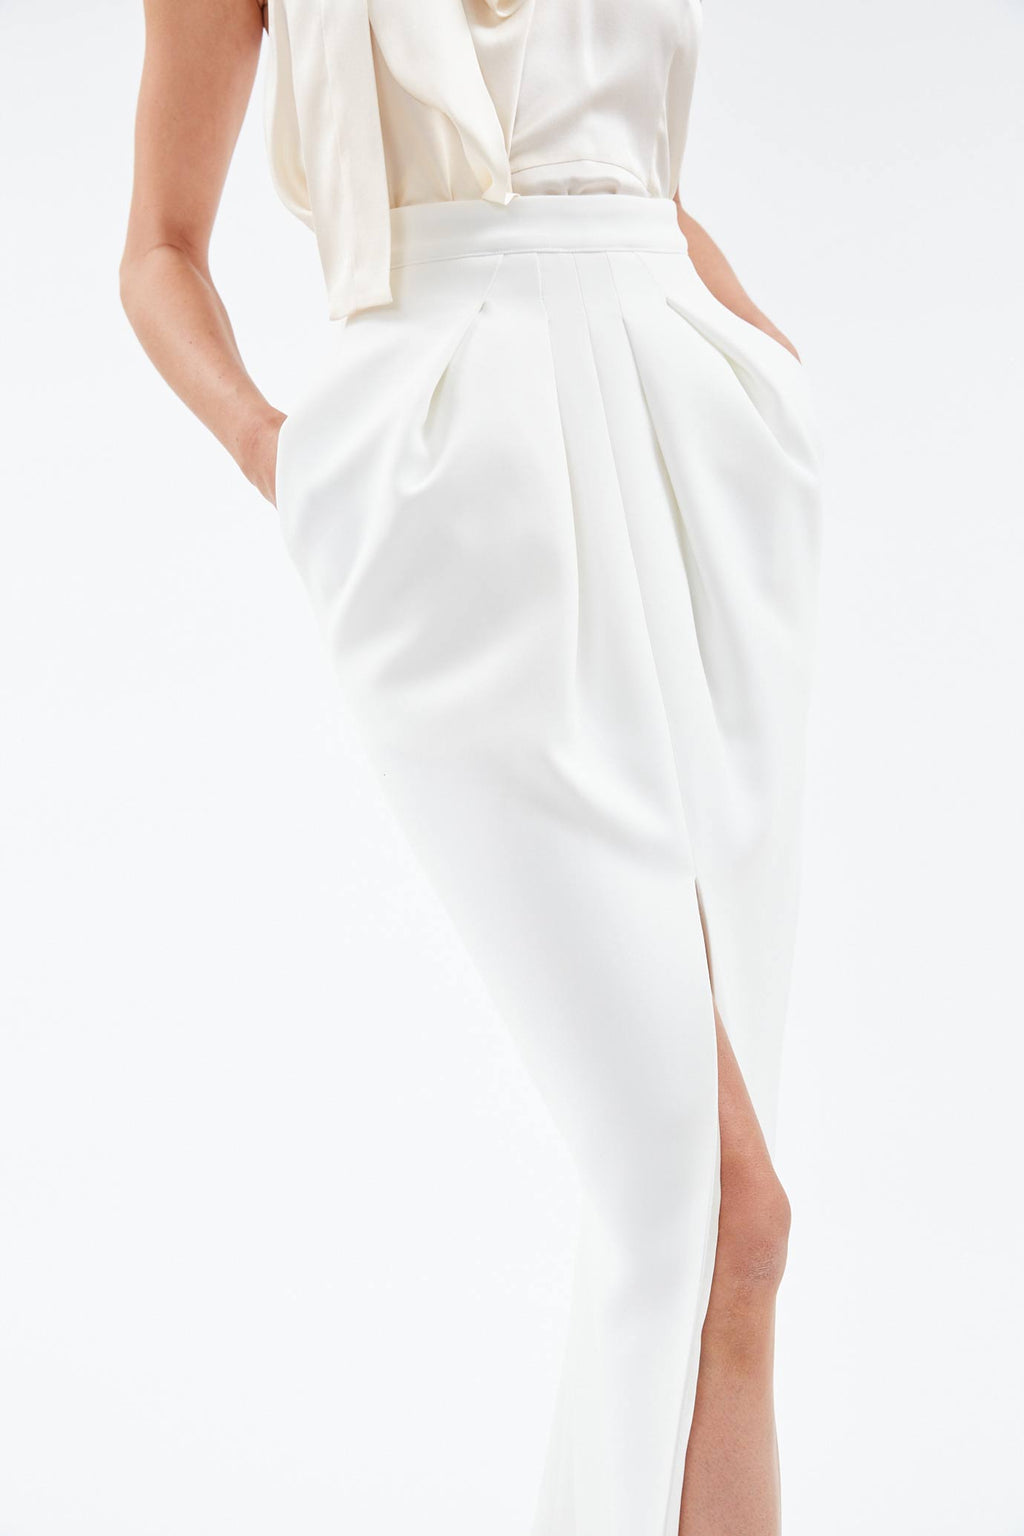 Ensemble White Skirt